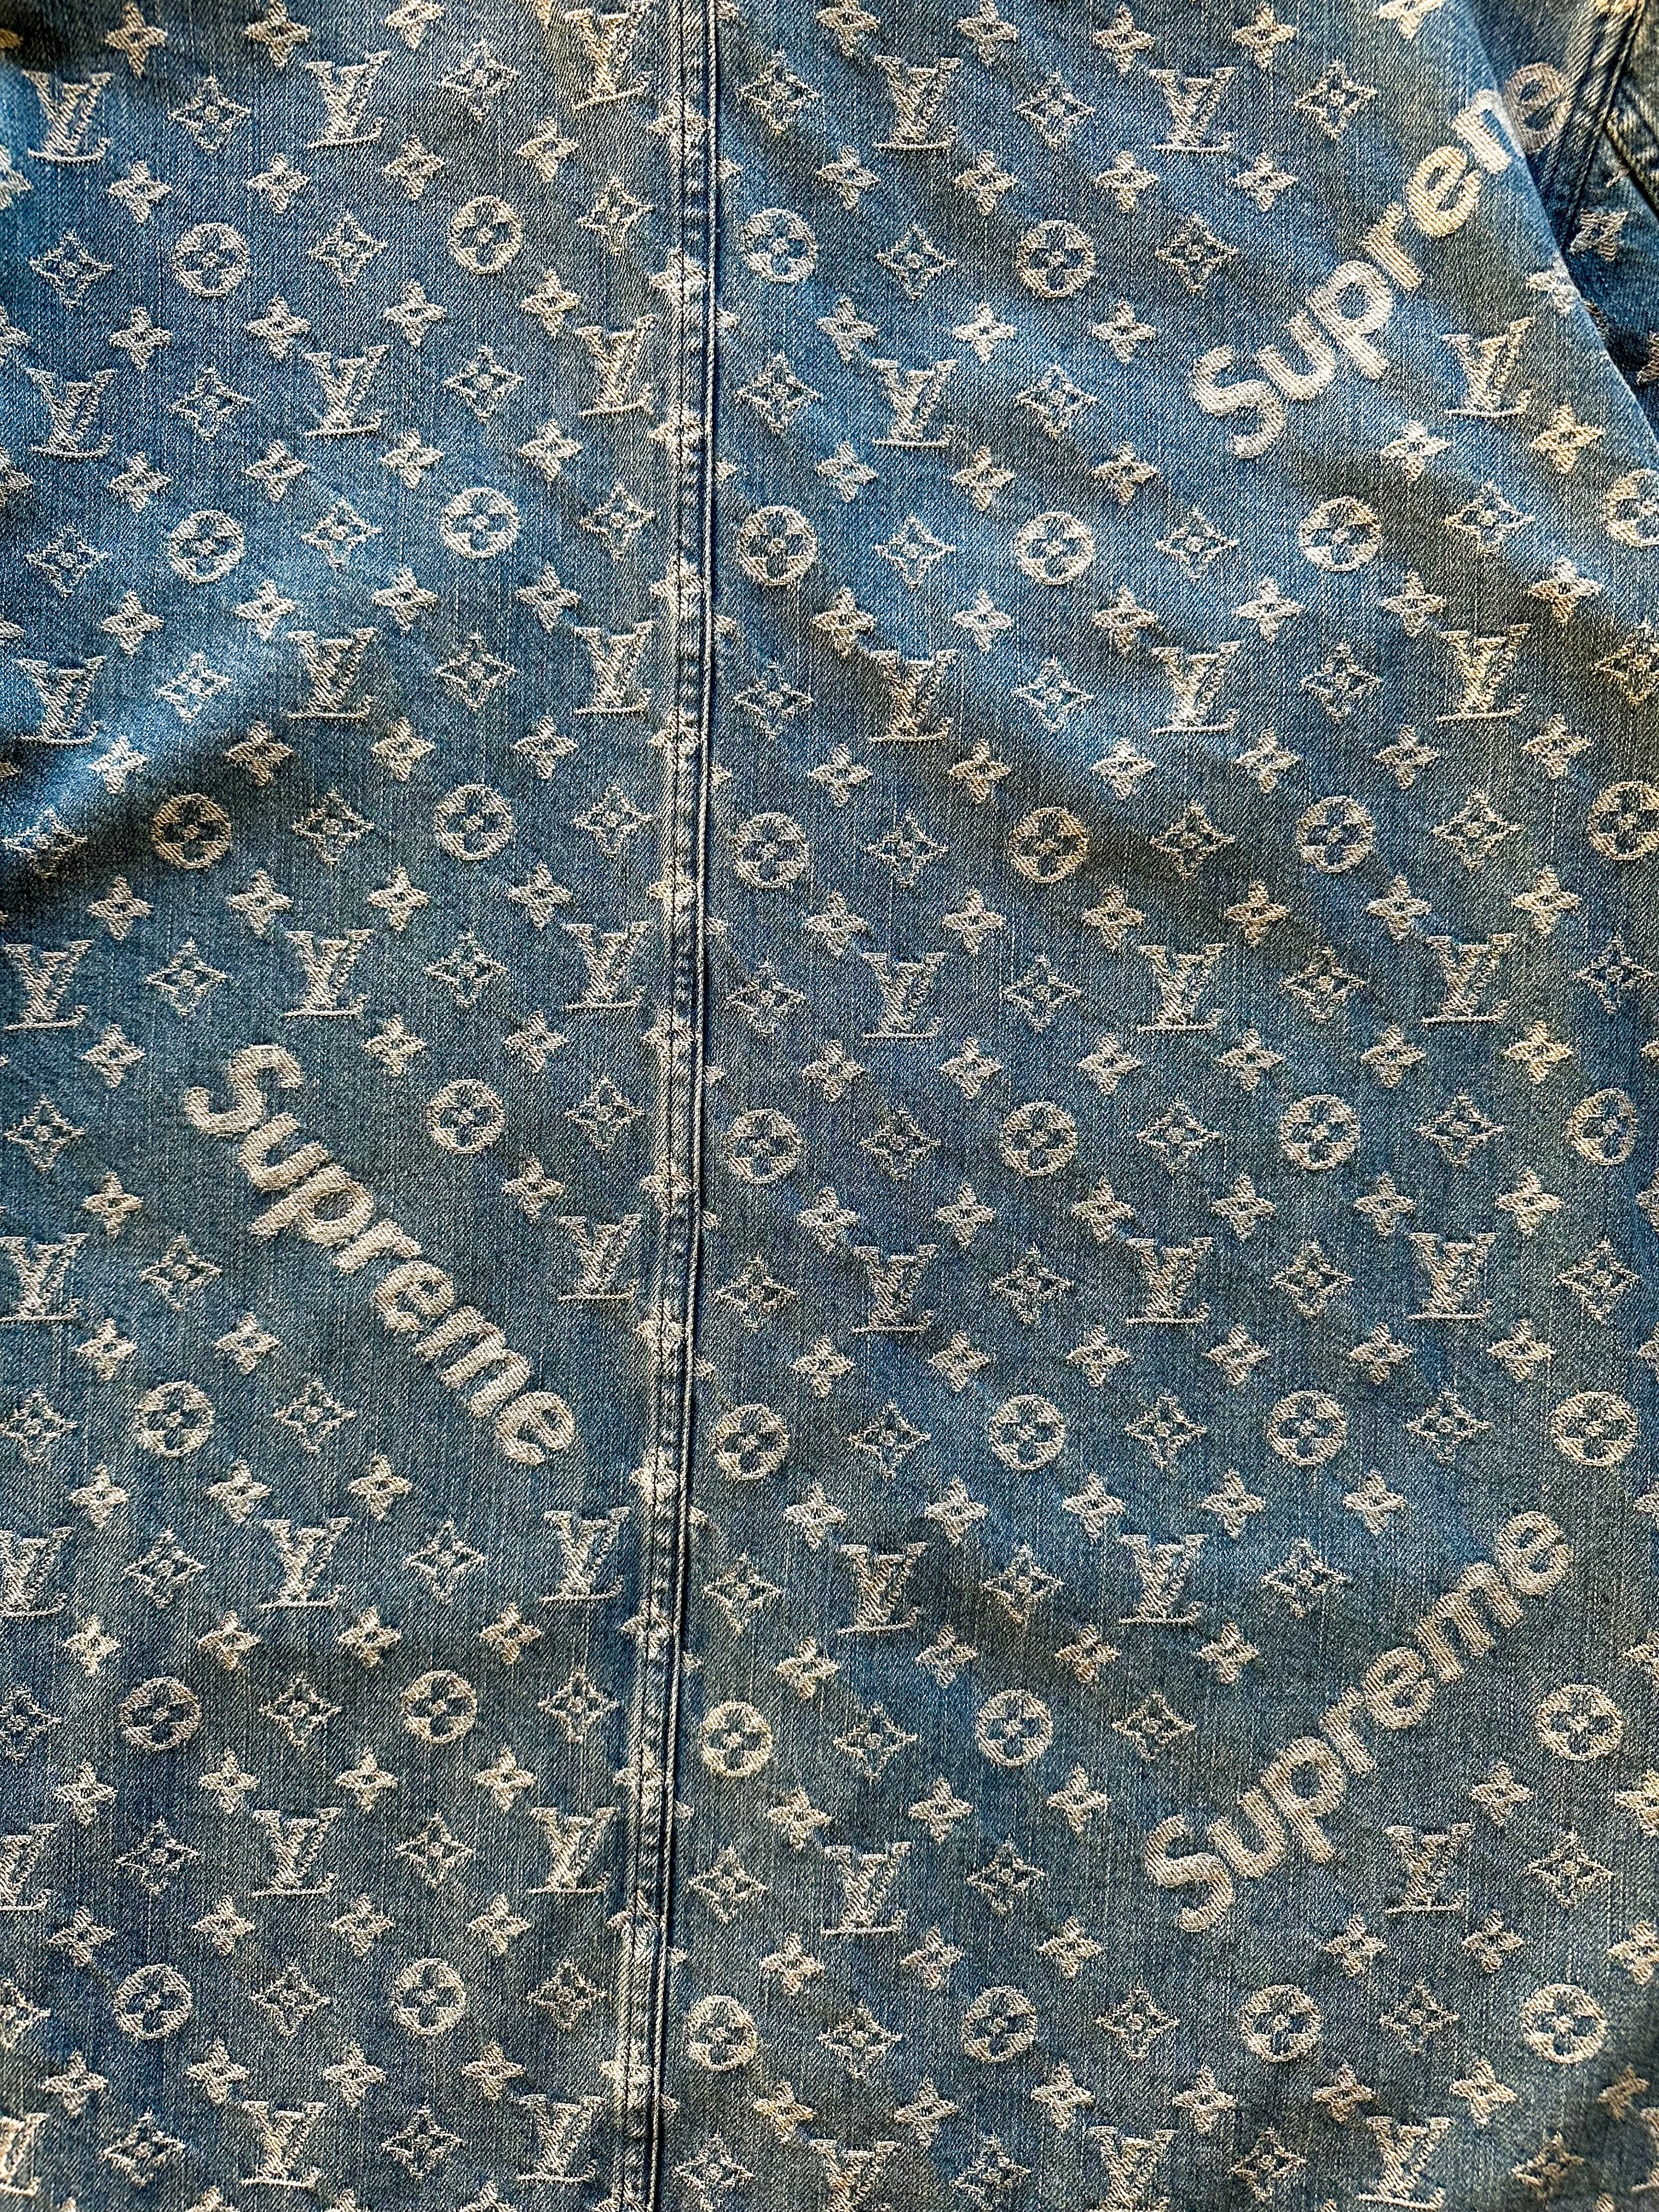 Supreme Supreme x Louis Vuitton Denim Chor Jaket